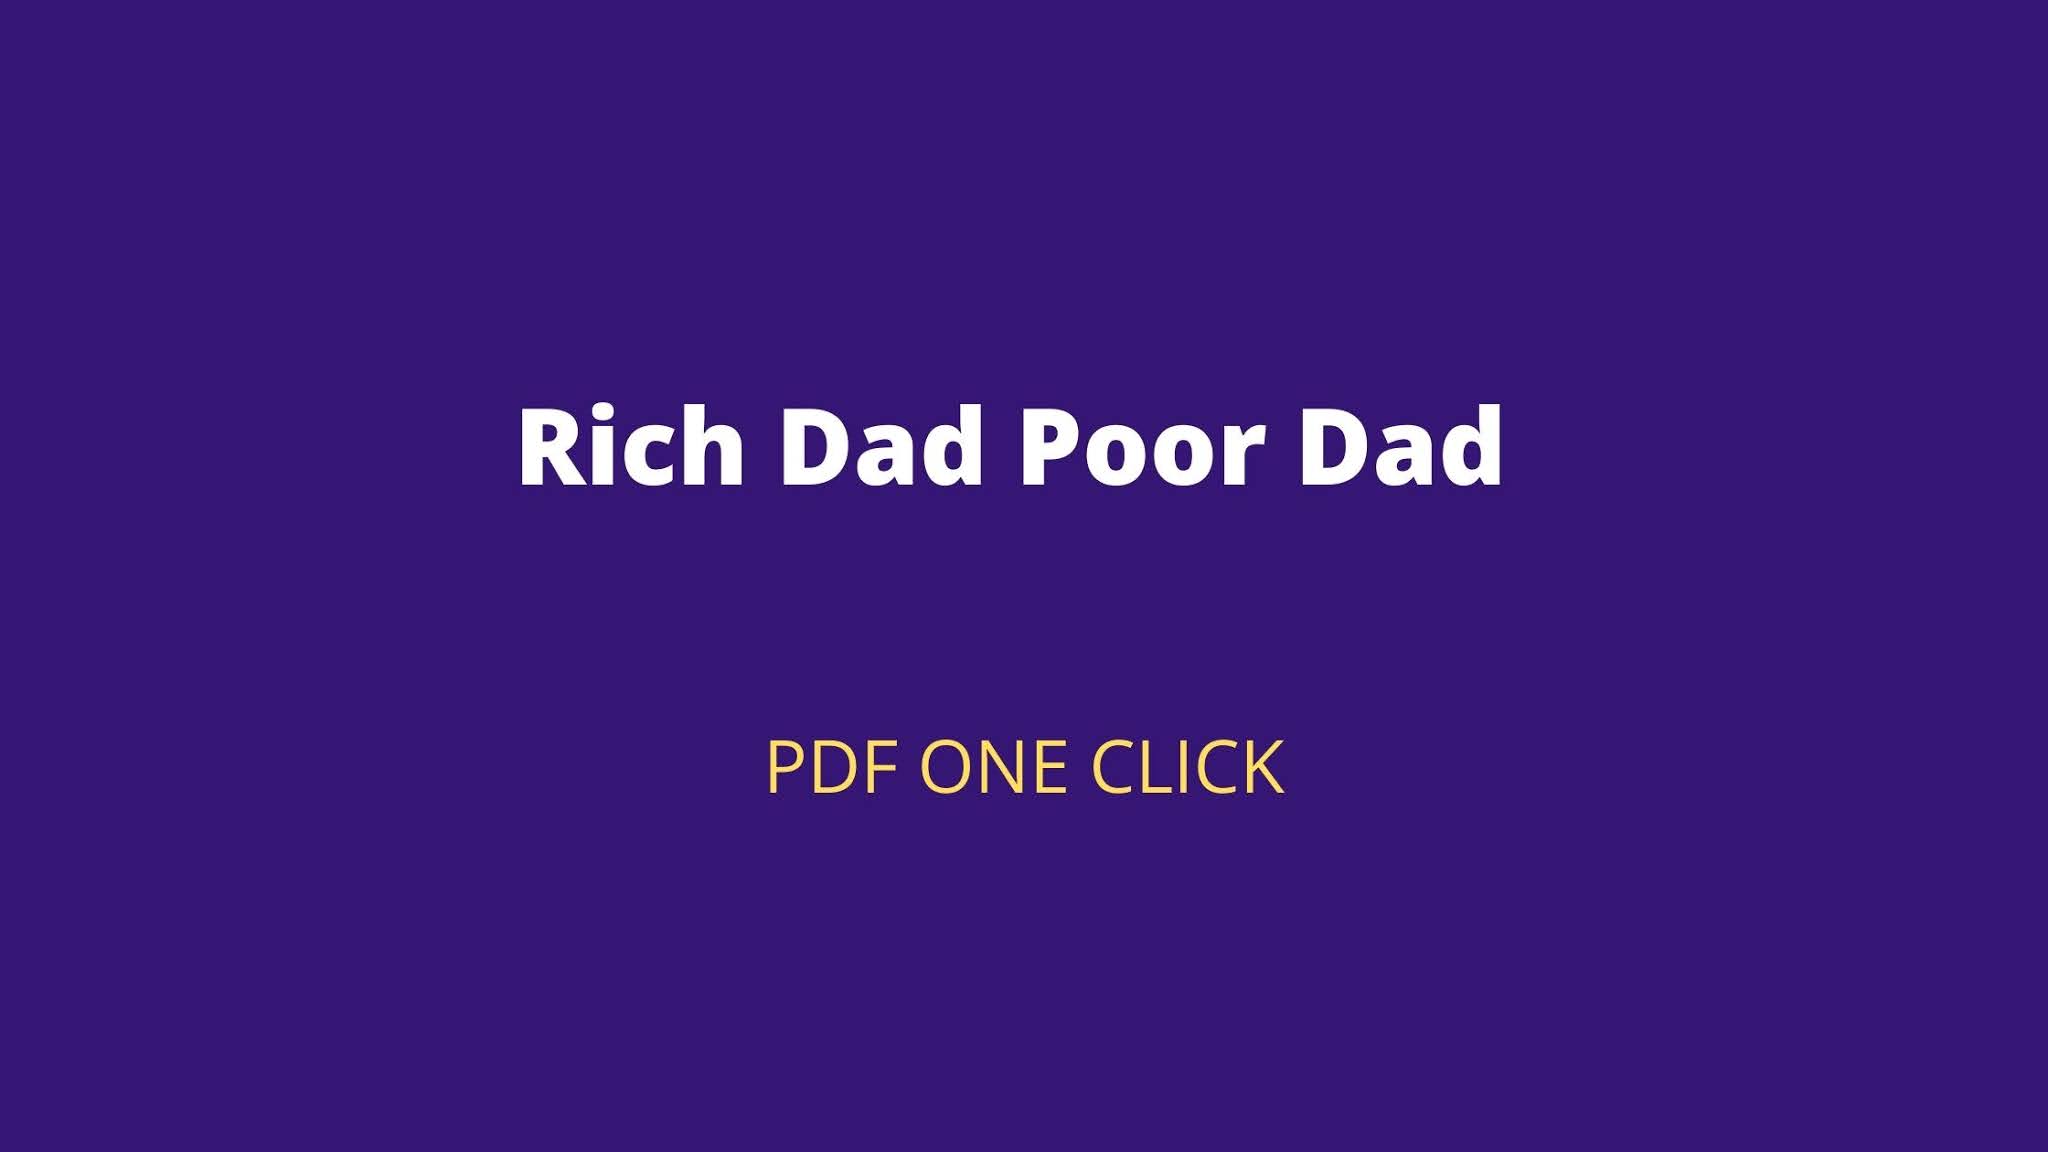 ▷Rich Dad Poor Dad Free PDF in Tamil【 One Click】